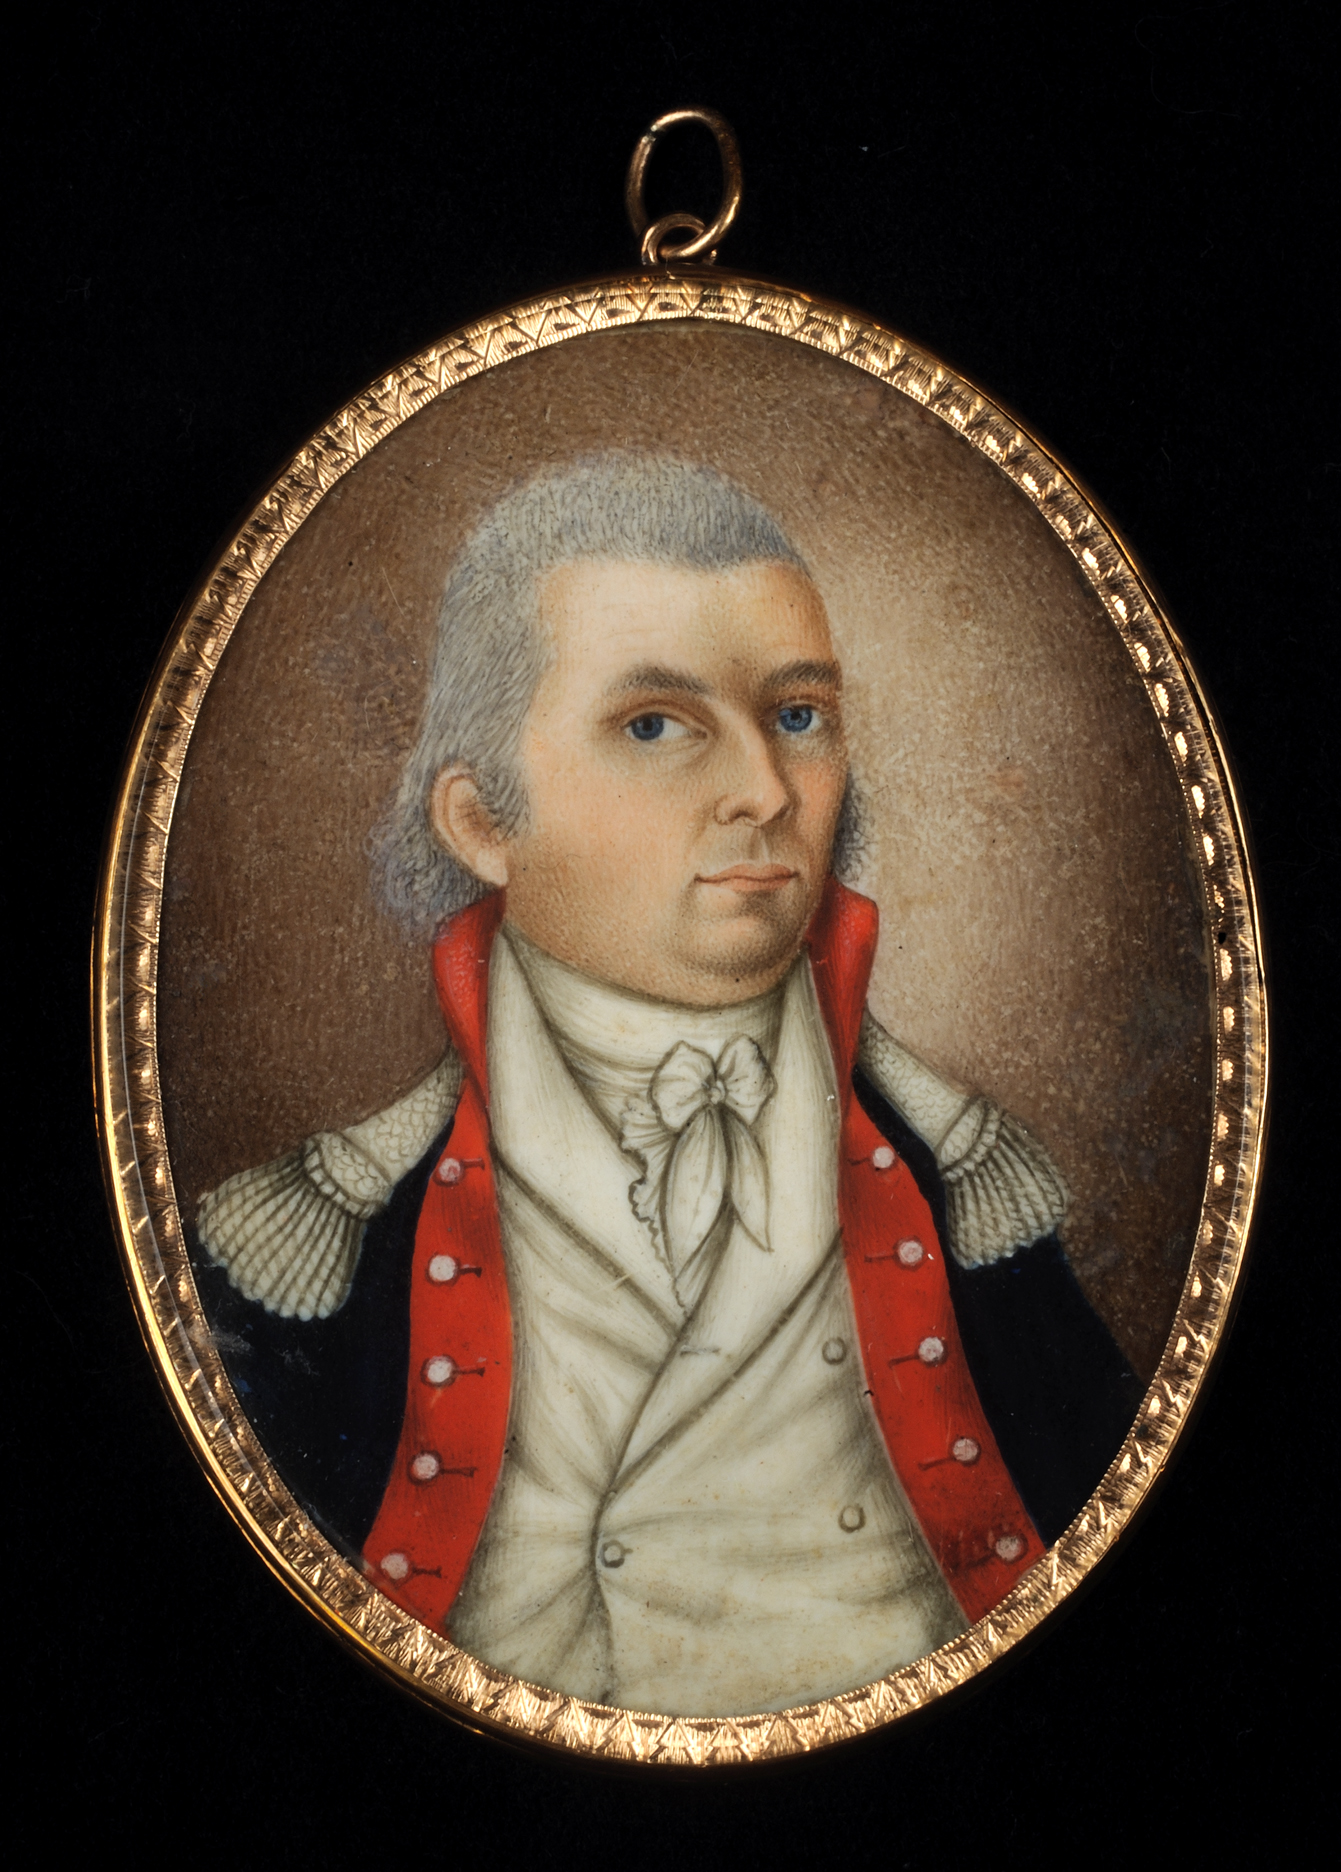 John Hutchinson Buell portrait miniature attributed to Isaac Sanford, ca. 1793-1799